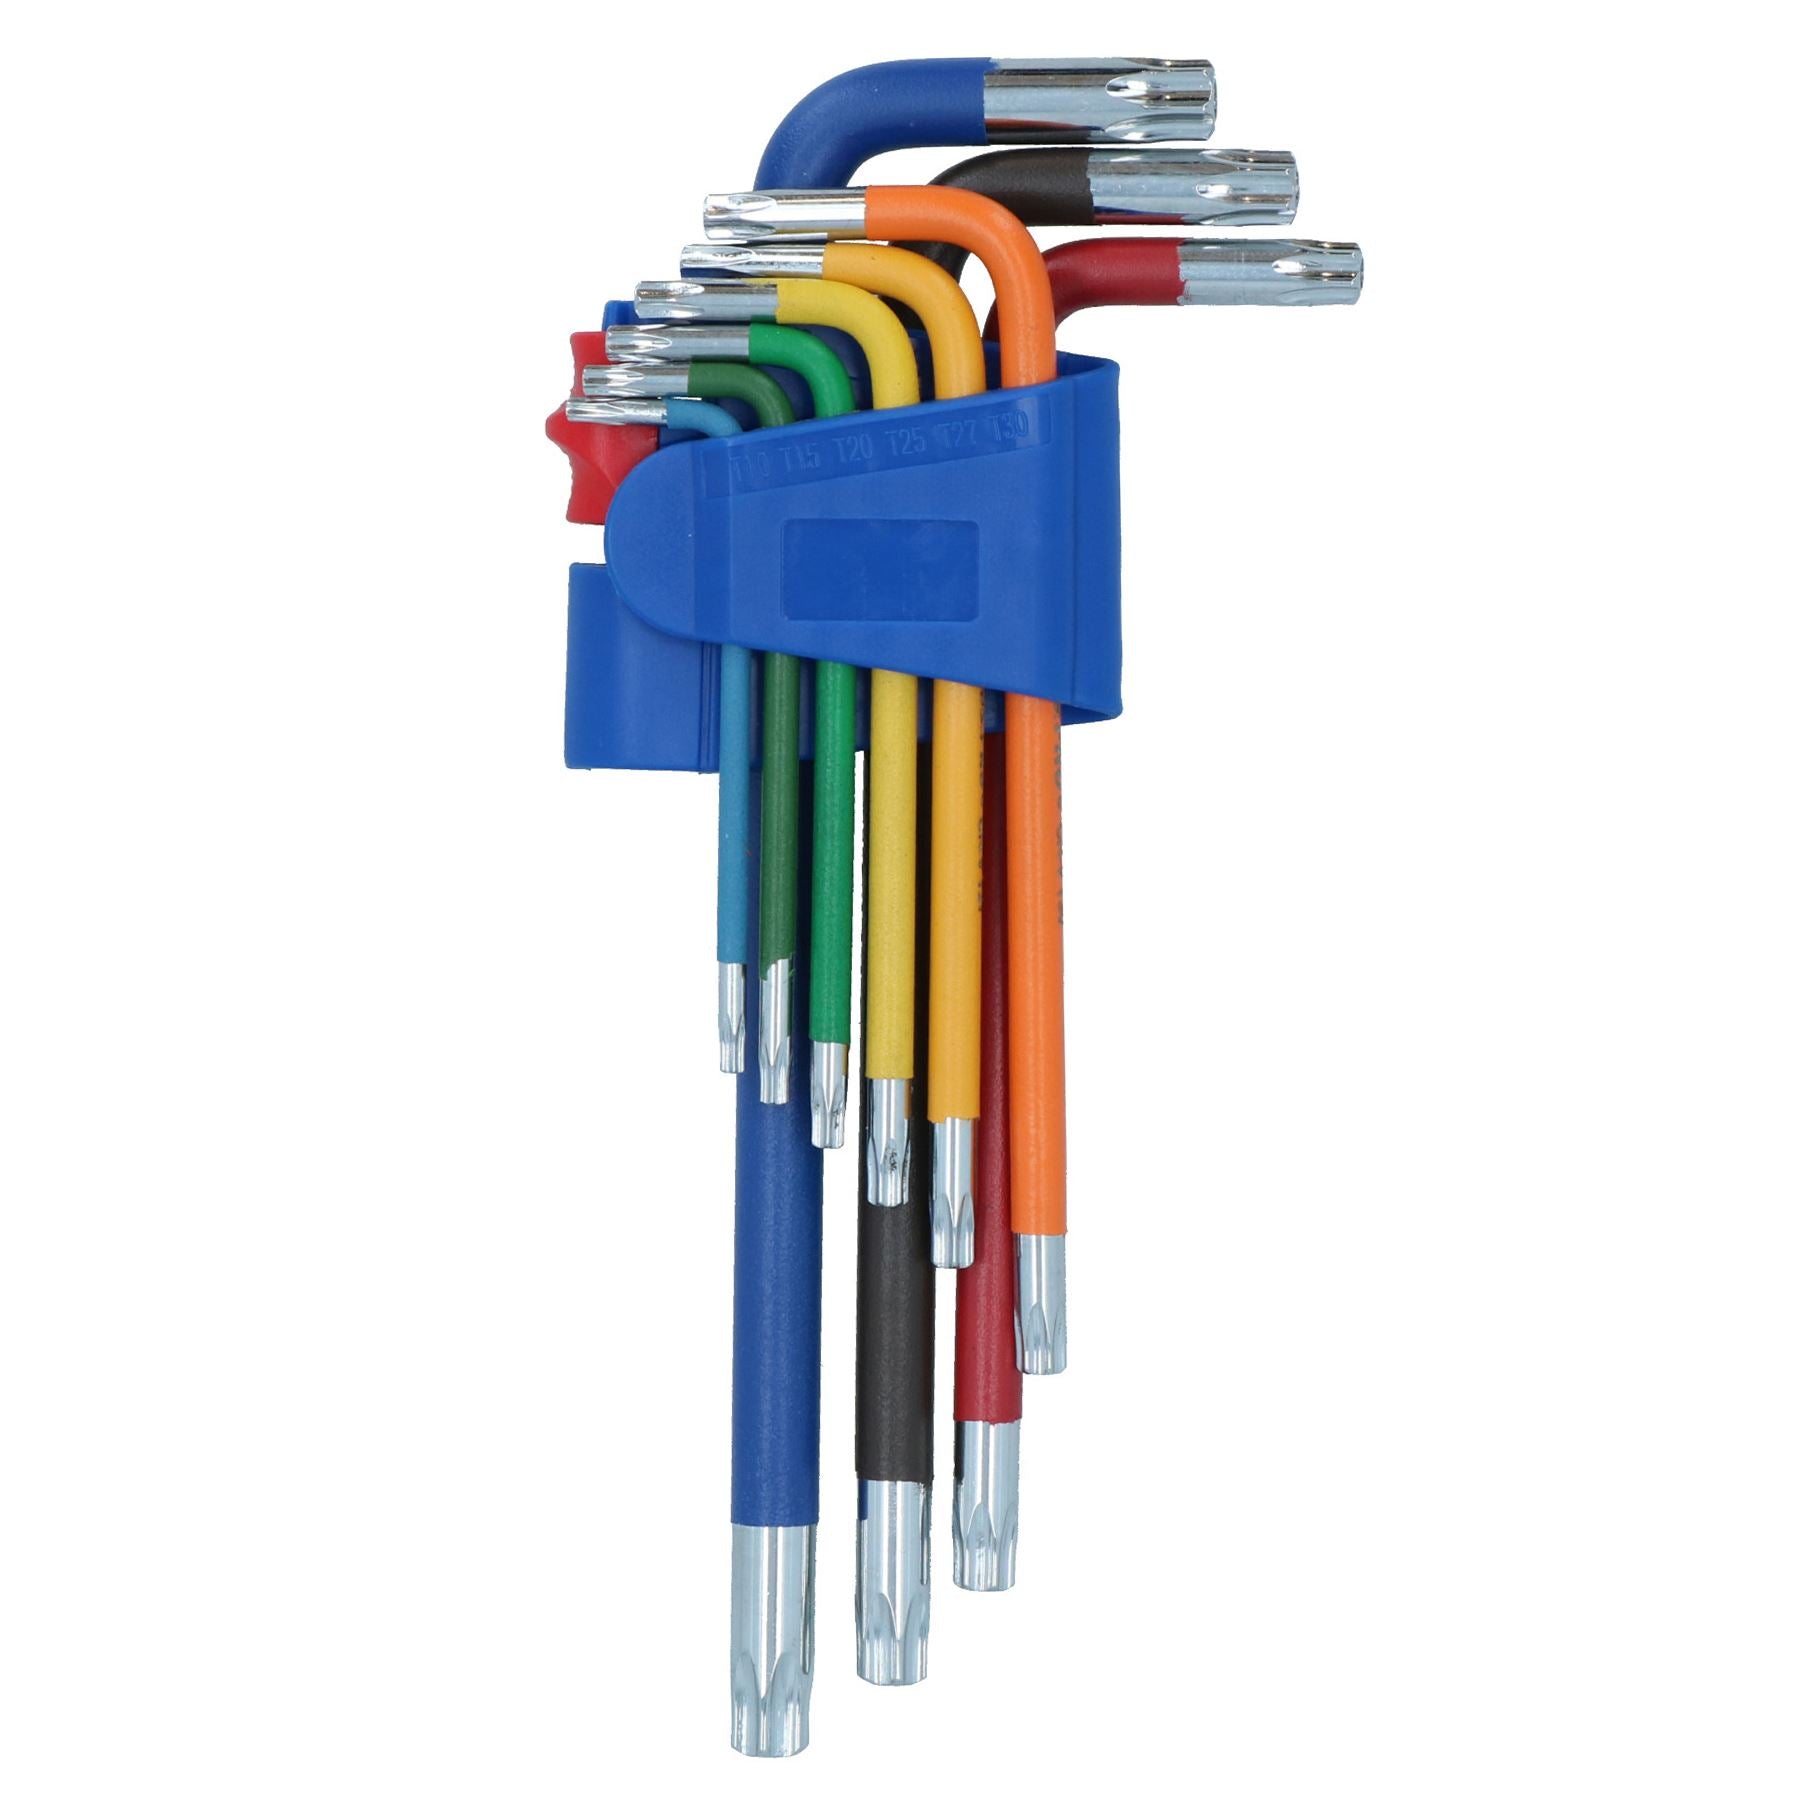 9pc Long Star Torx Tamper Proof Torx Keys Multicoloured with Holder T10 – T50